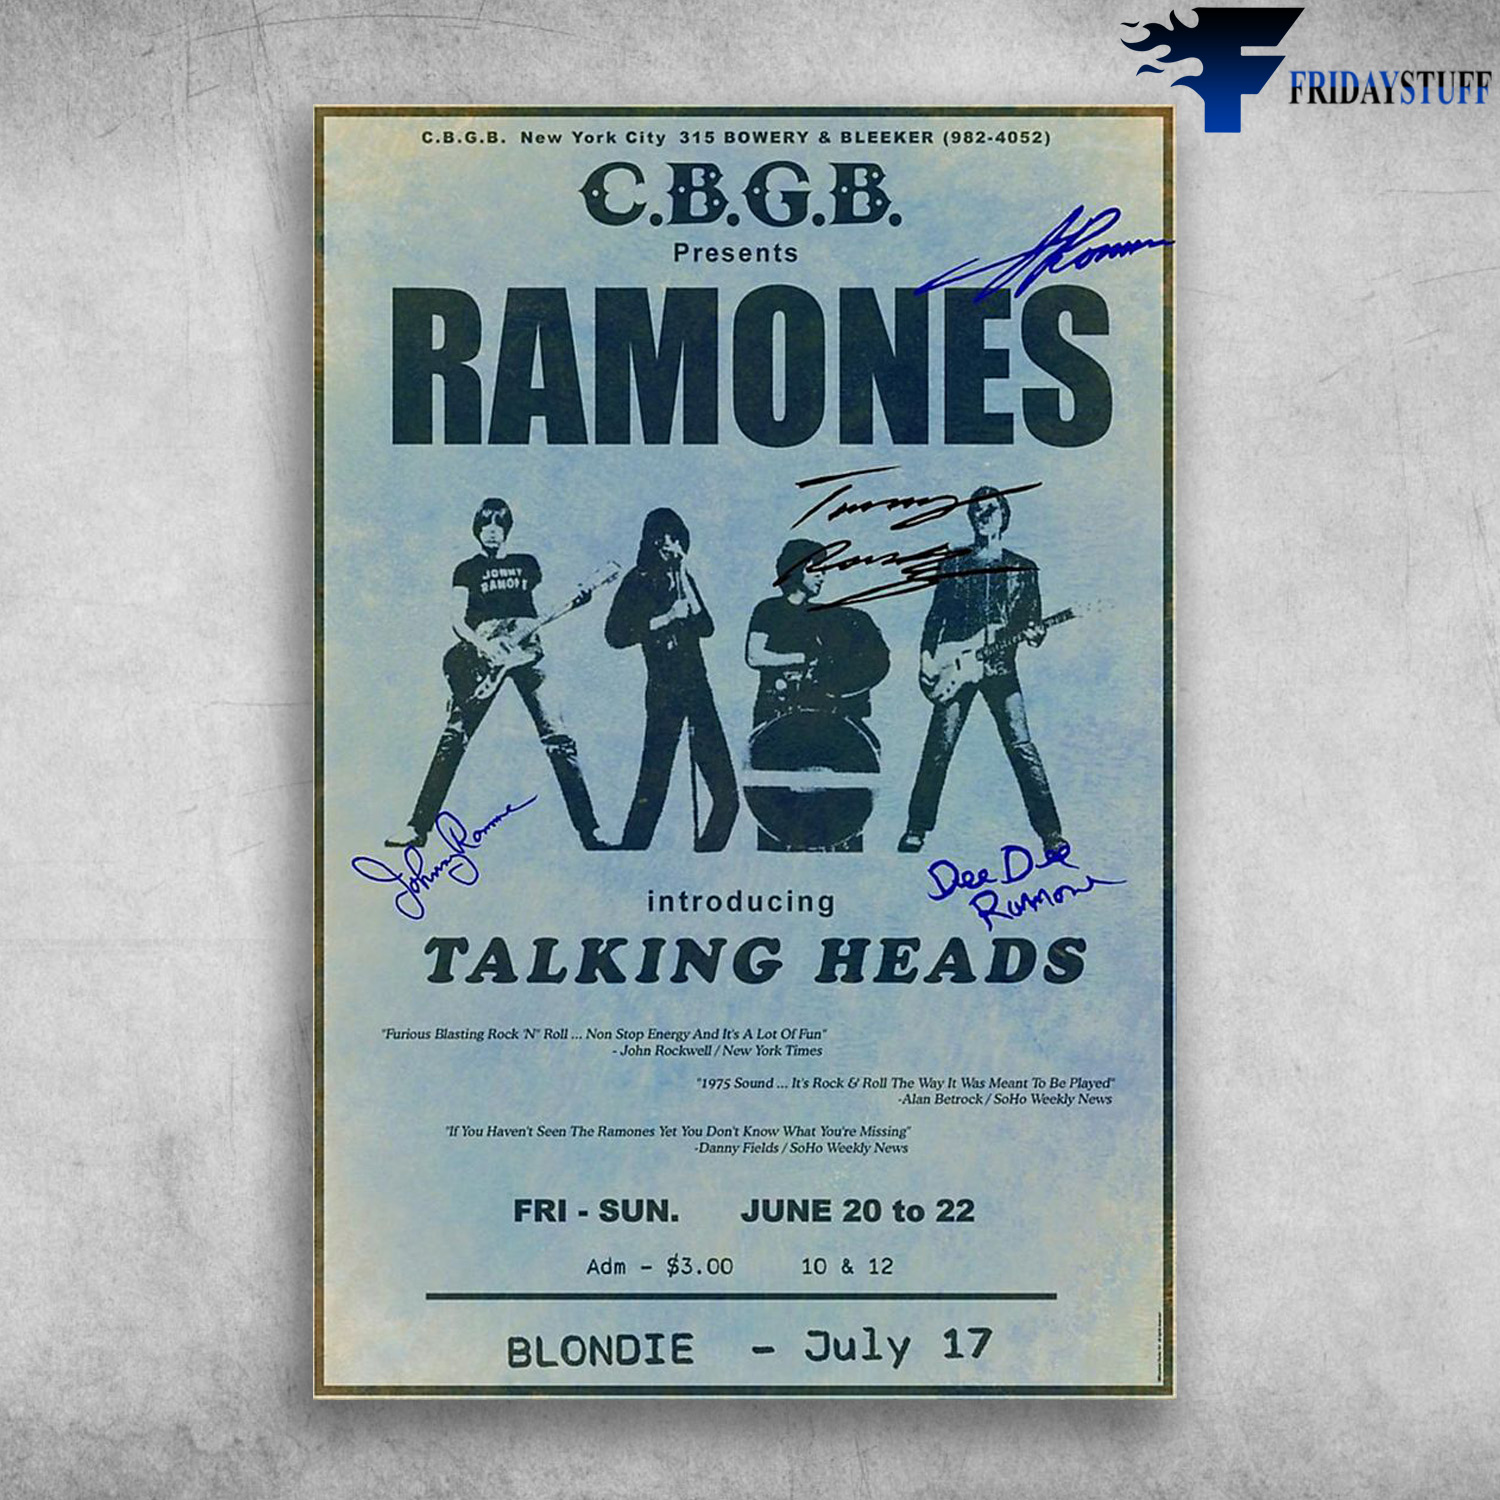 CBGB Presents Ramones Introducing Talking Heads